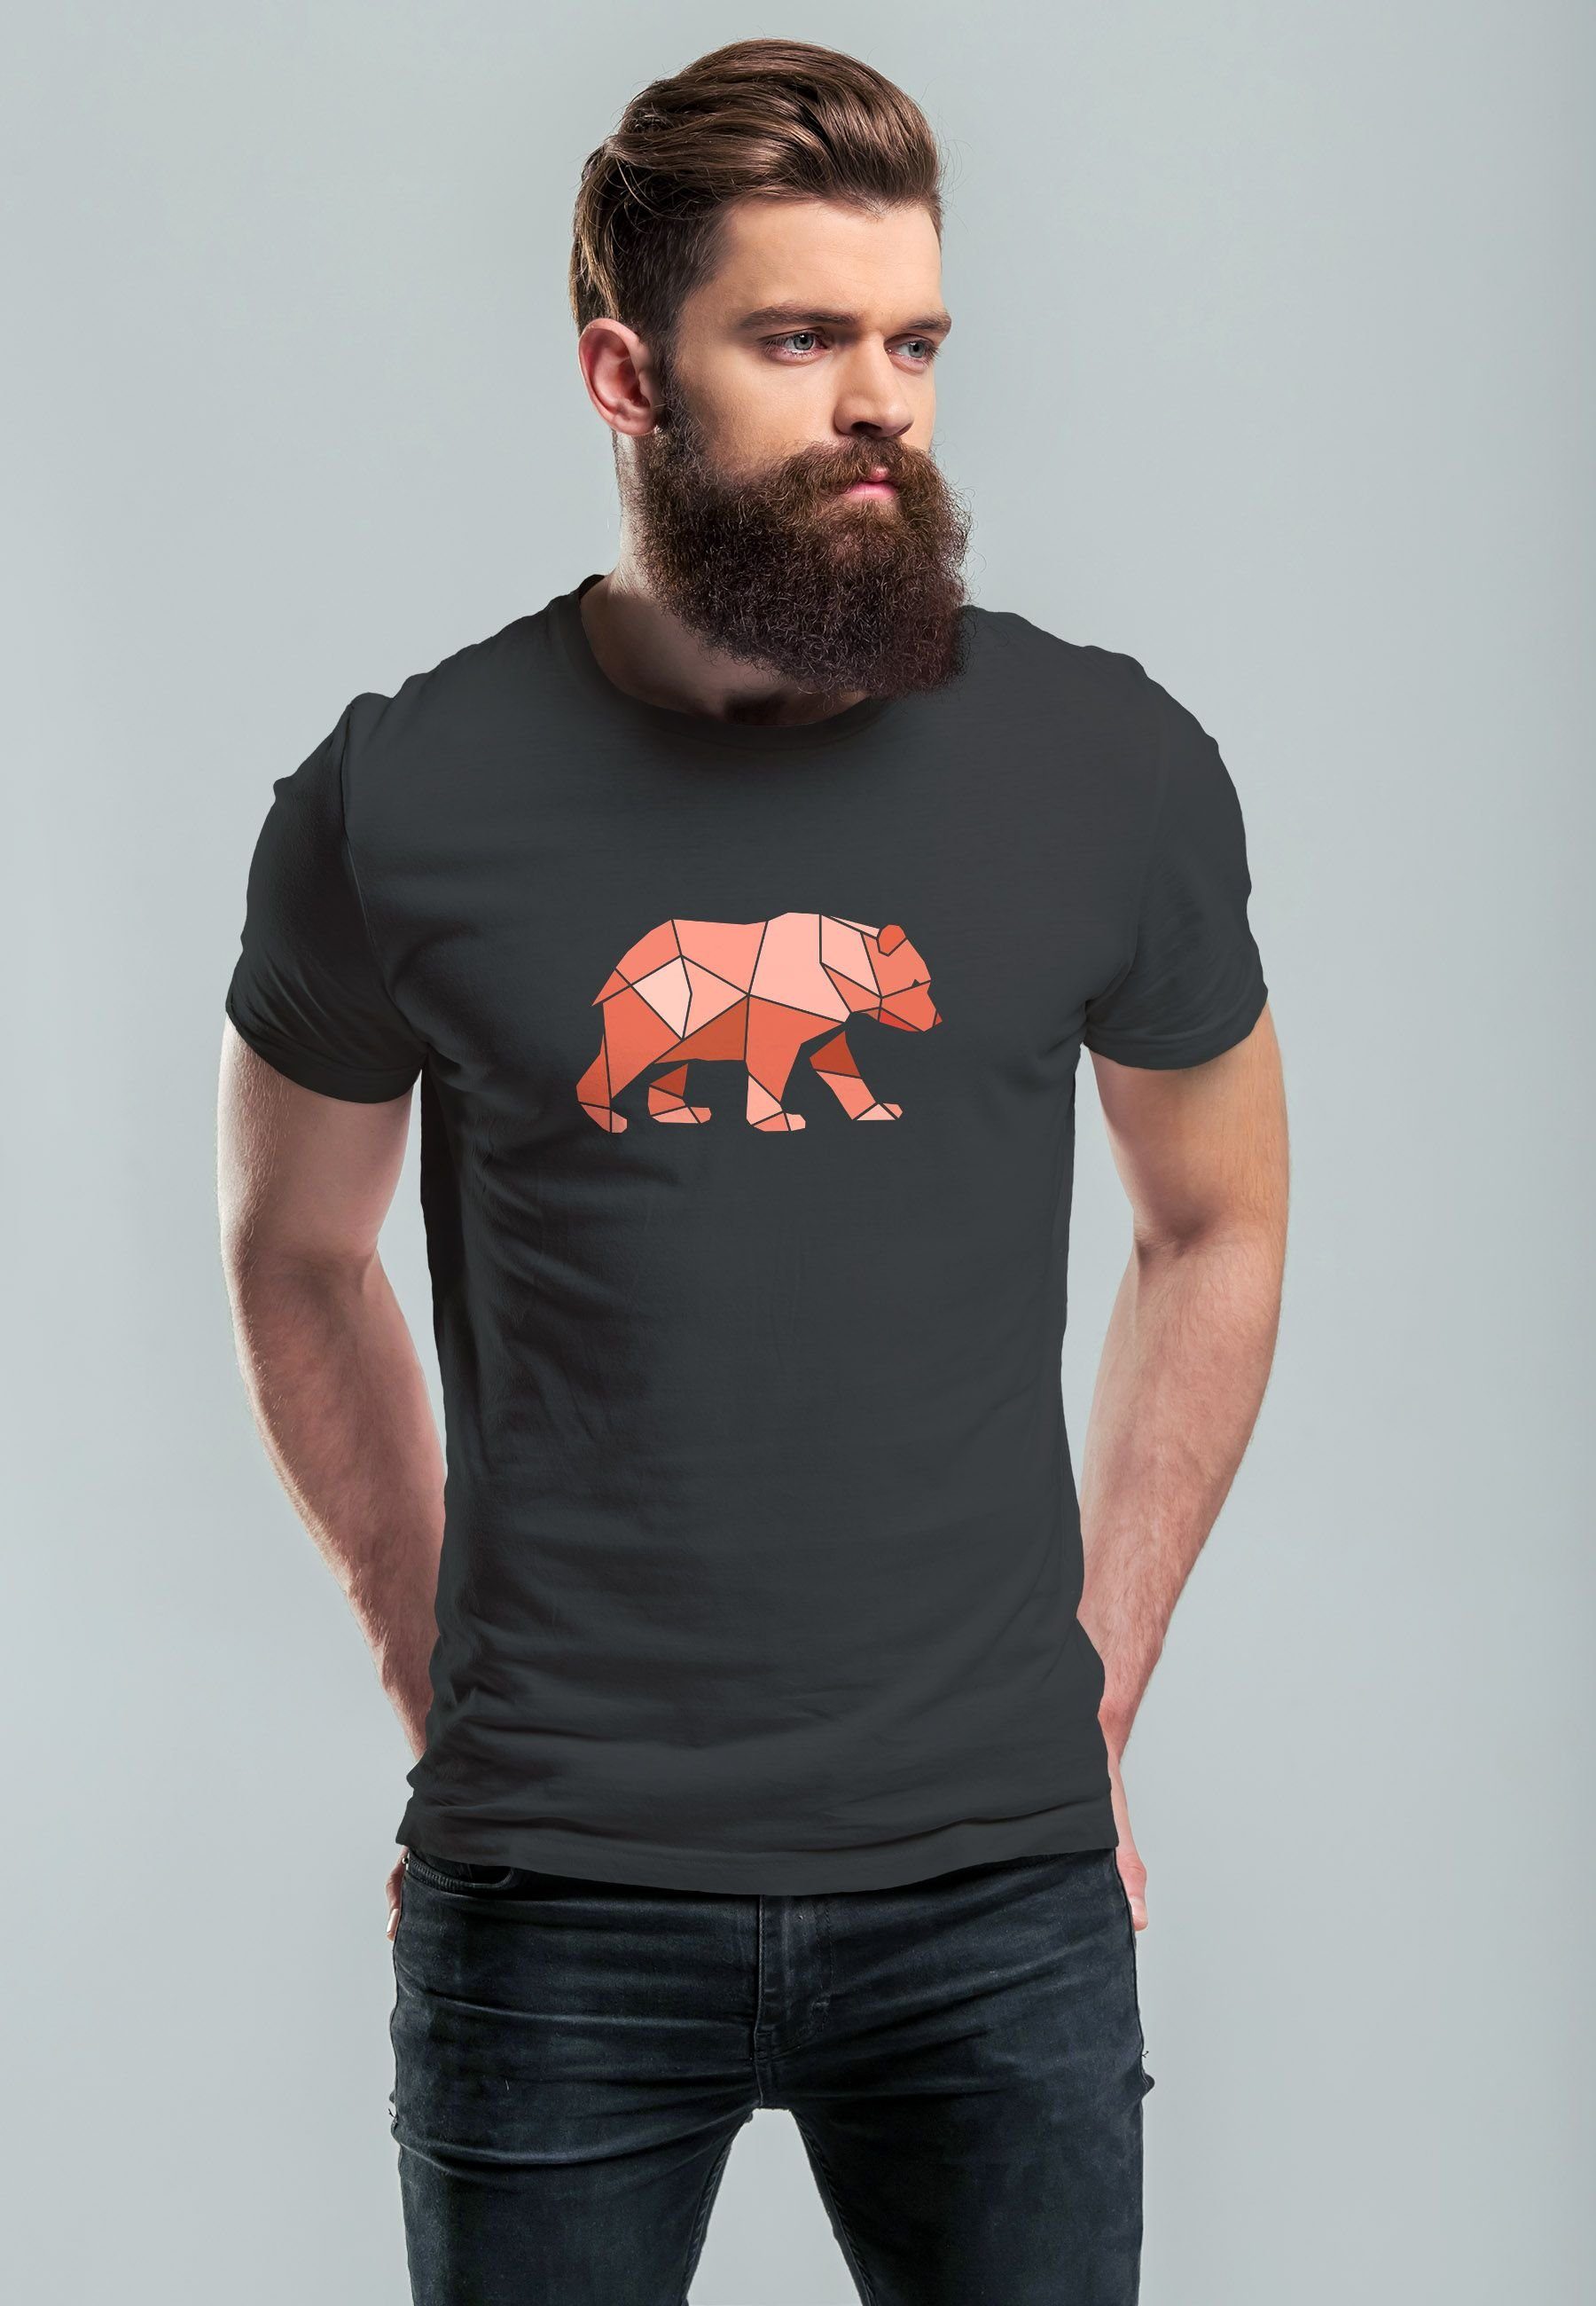 Grafik T-Shirt Printshirt Fash Polygon Motive Bär Print Natur mit anthrazit Herren Print-Shirt Neverless Outdoor